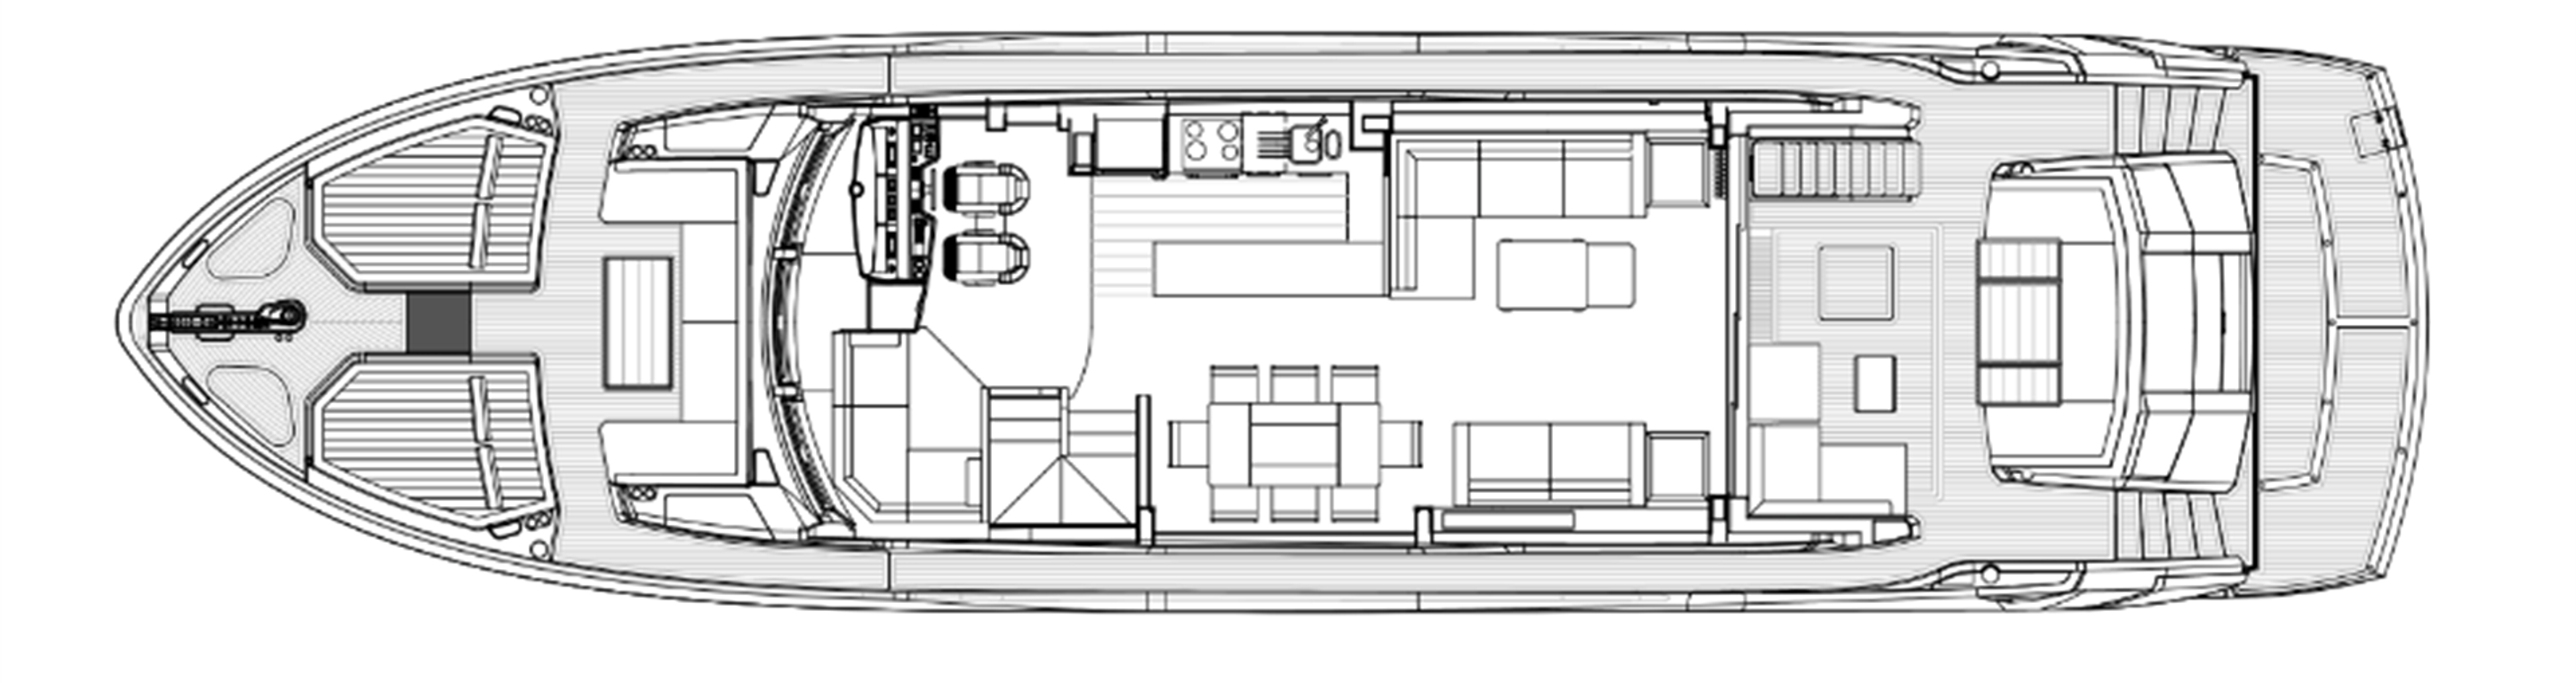 Main deck layout